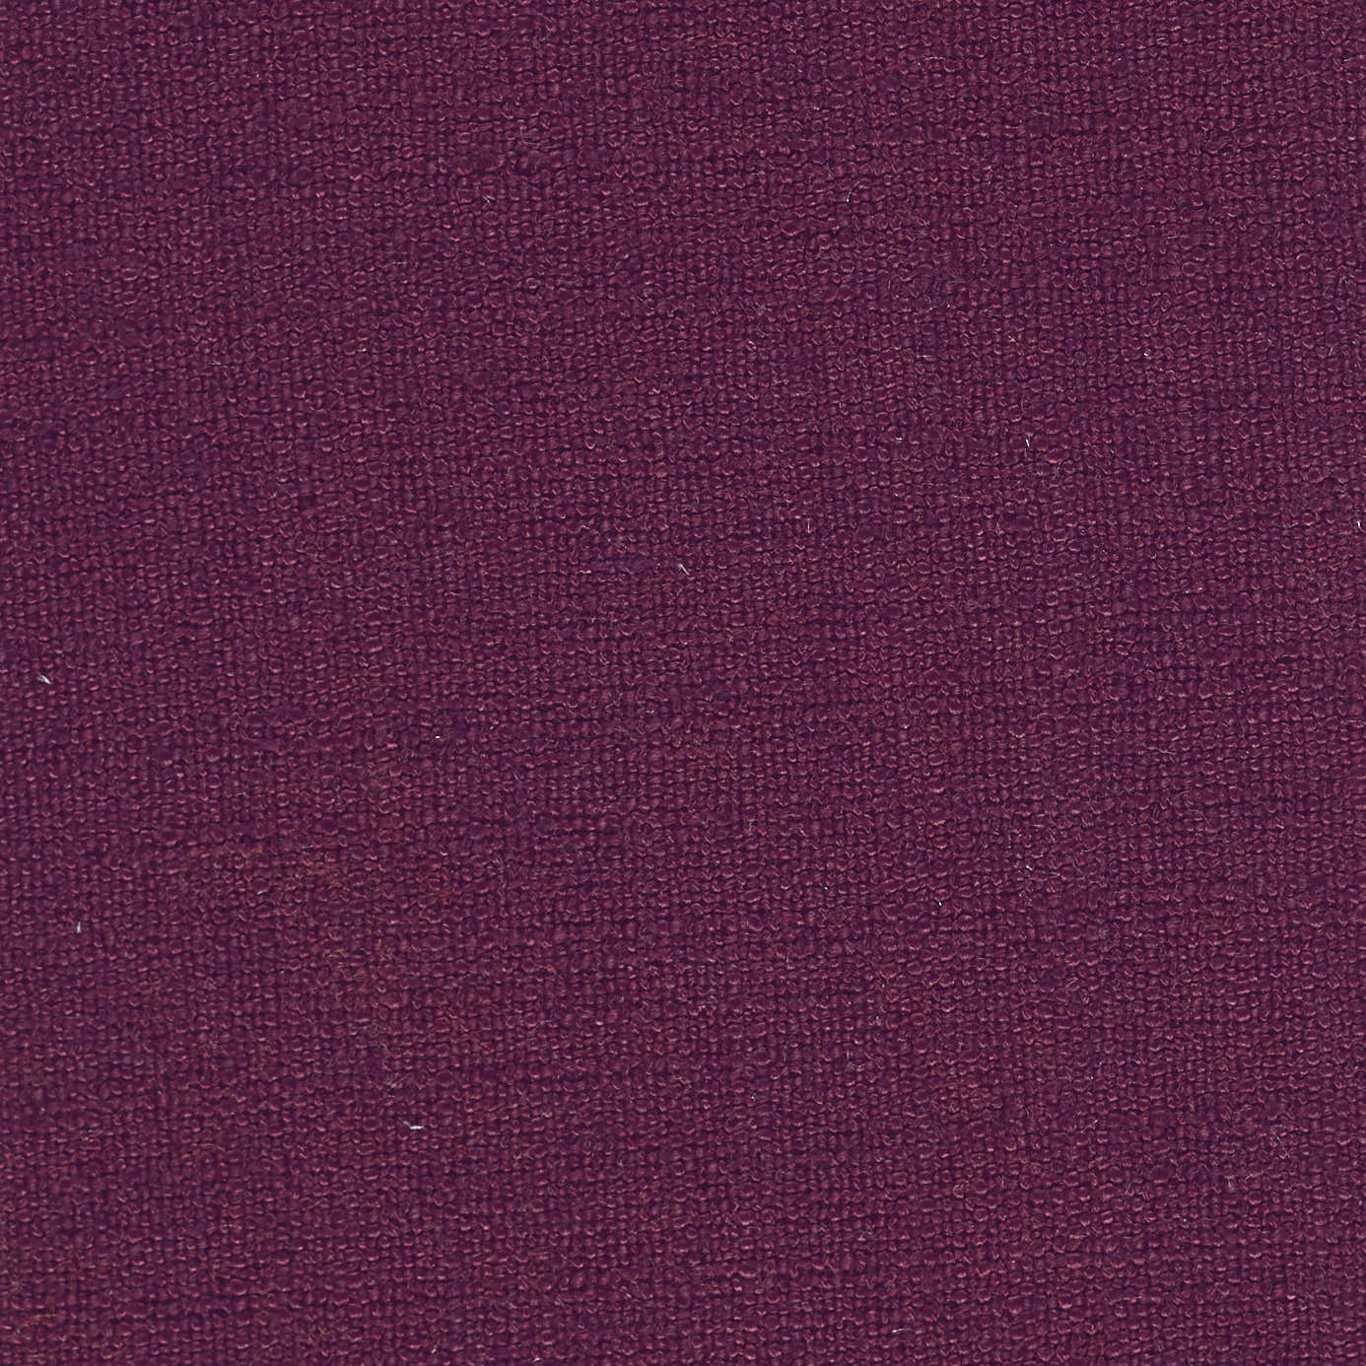 Harmonic Mulberry Fabric by HAR